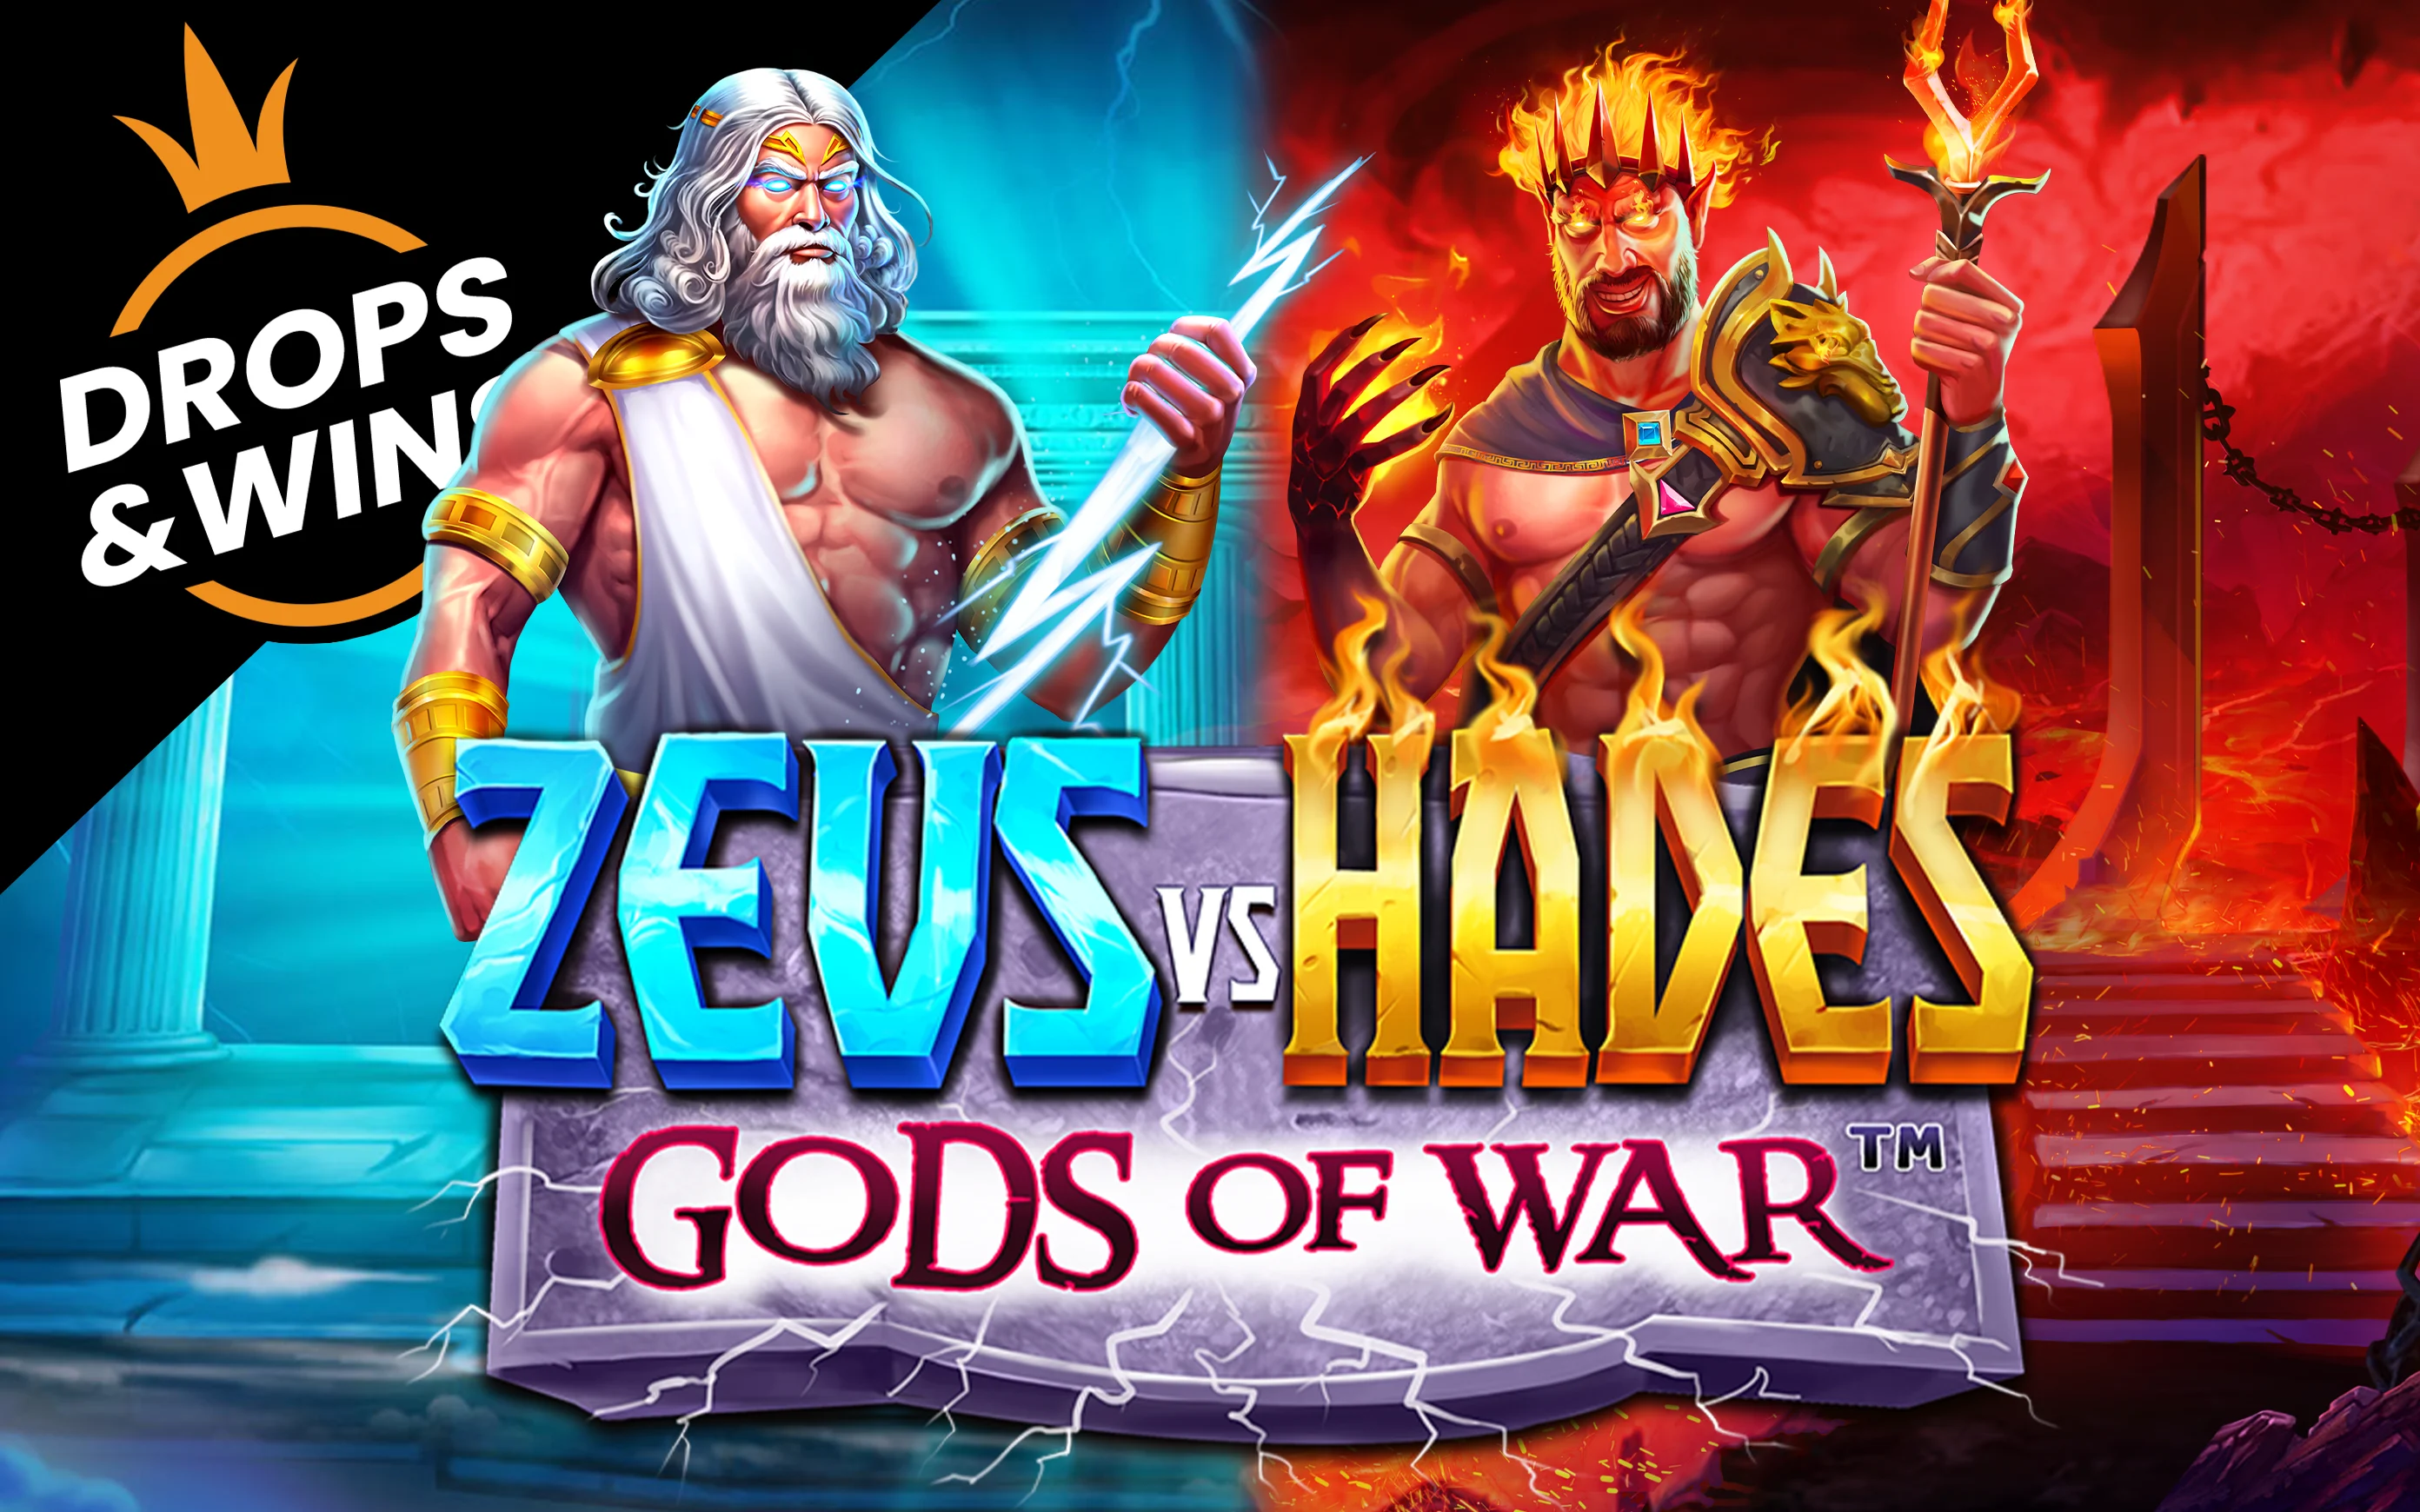 Грайте у Zeus vs Hades - Gods of War™ в онлайн-казино Starcasino.be